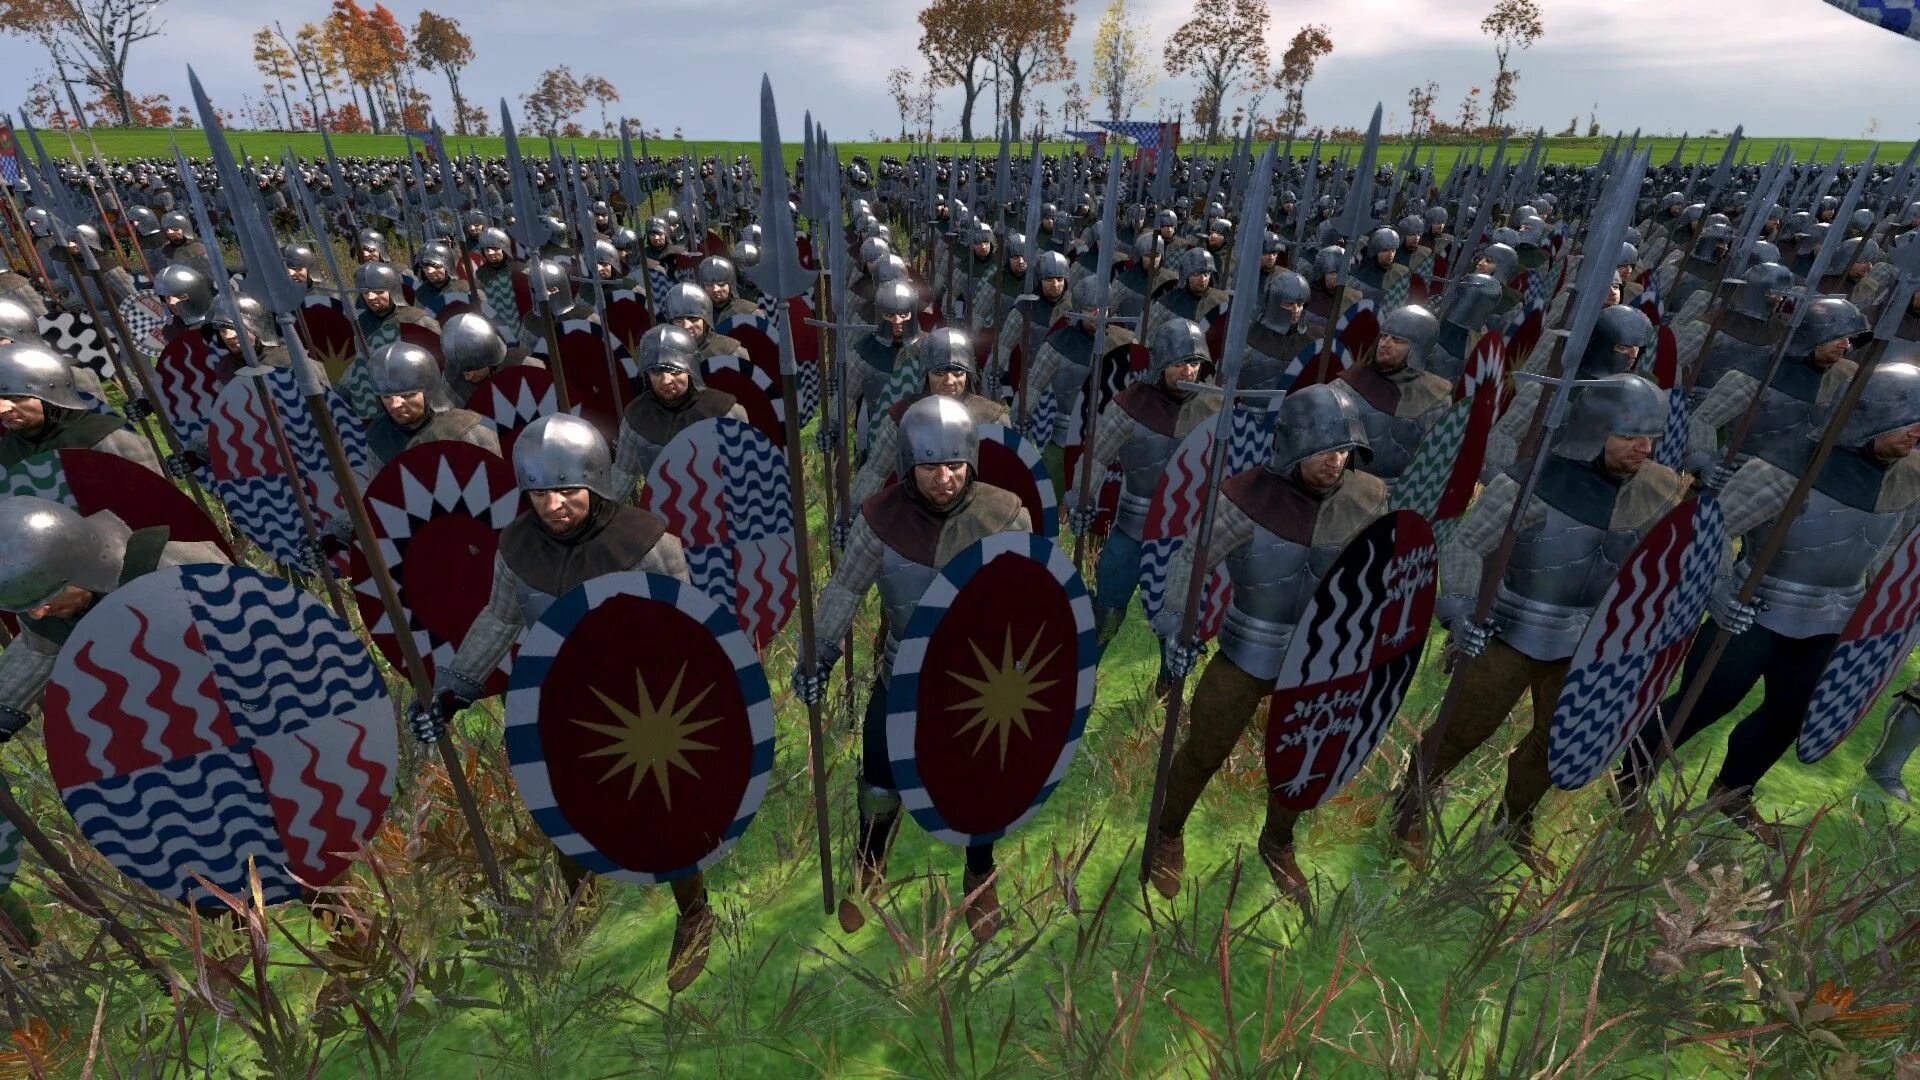 Медивал 2 юниты. Юниты тотал вар Аттила Византия. Византийская Империя юниты тотал вар медивал кингдомс. Армия Византии тотал вар. Оттоманская пехота медивал тотал вар.